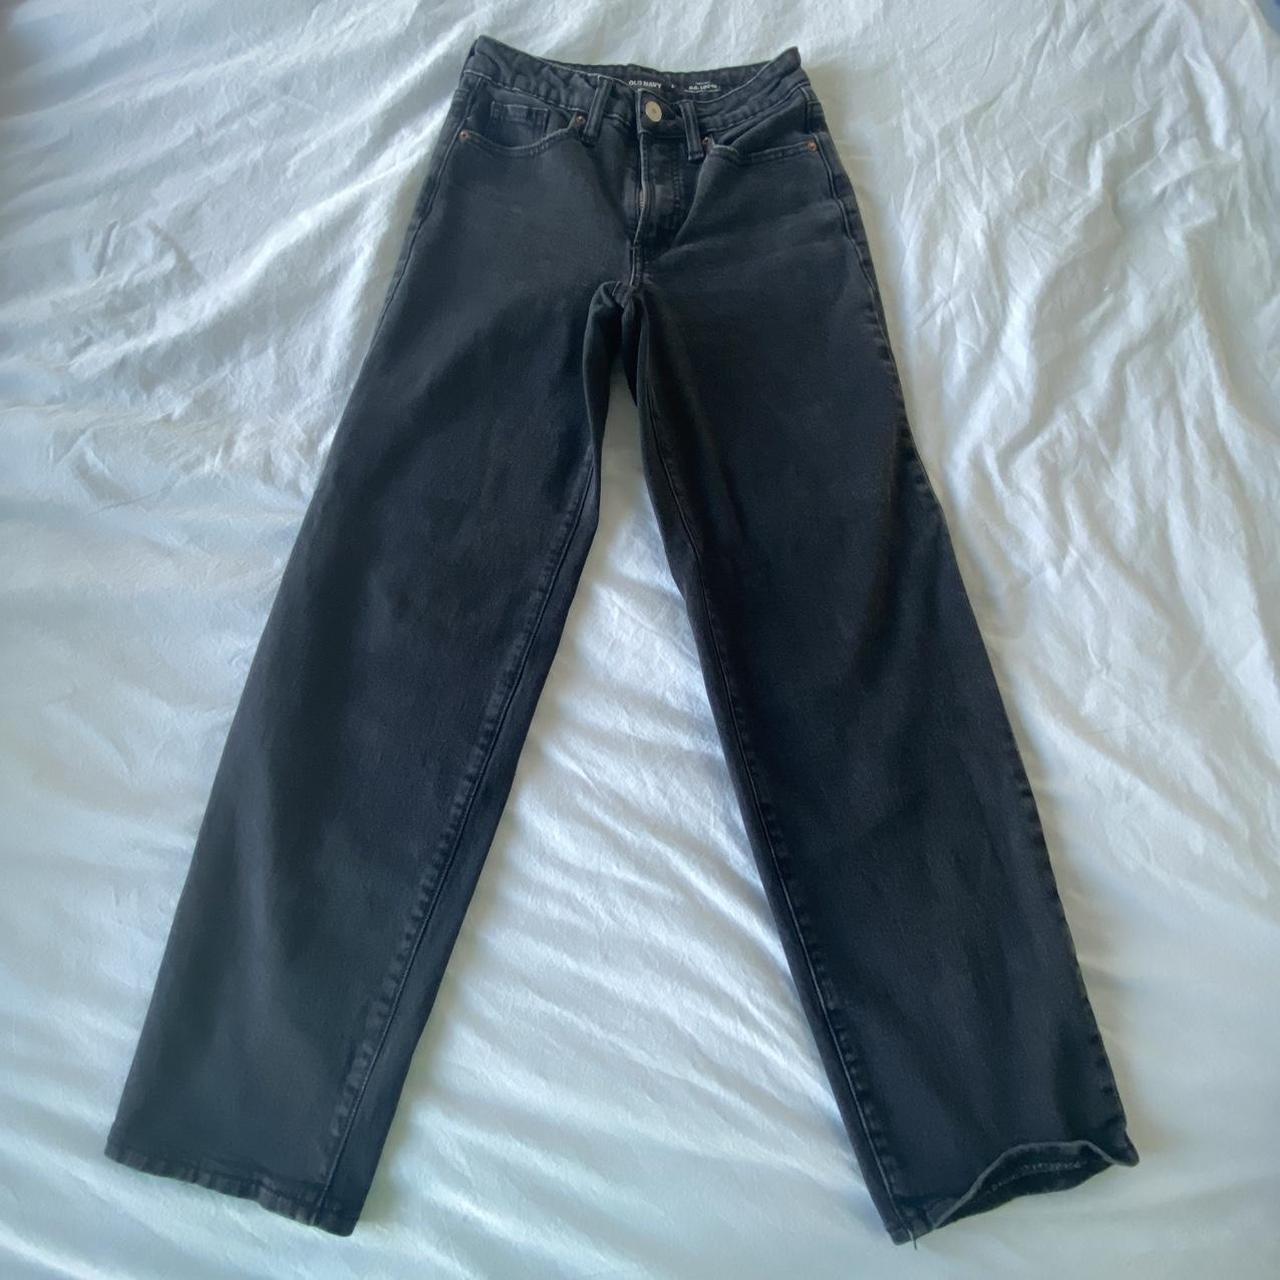 Straight leg black jeans - Depop